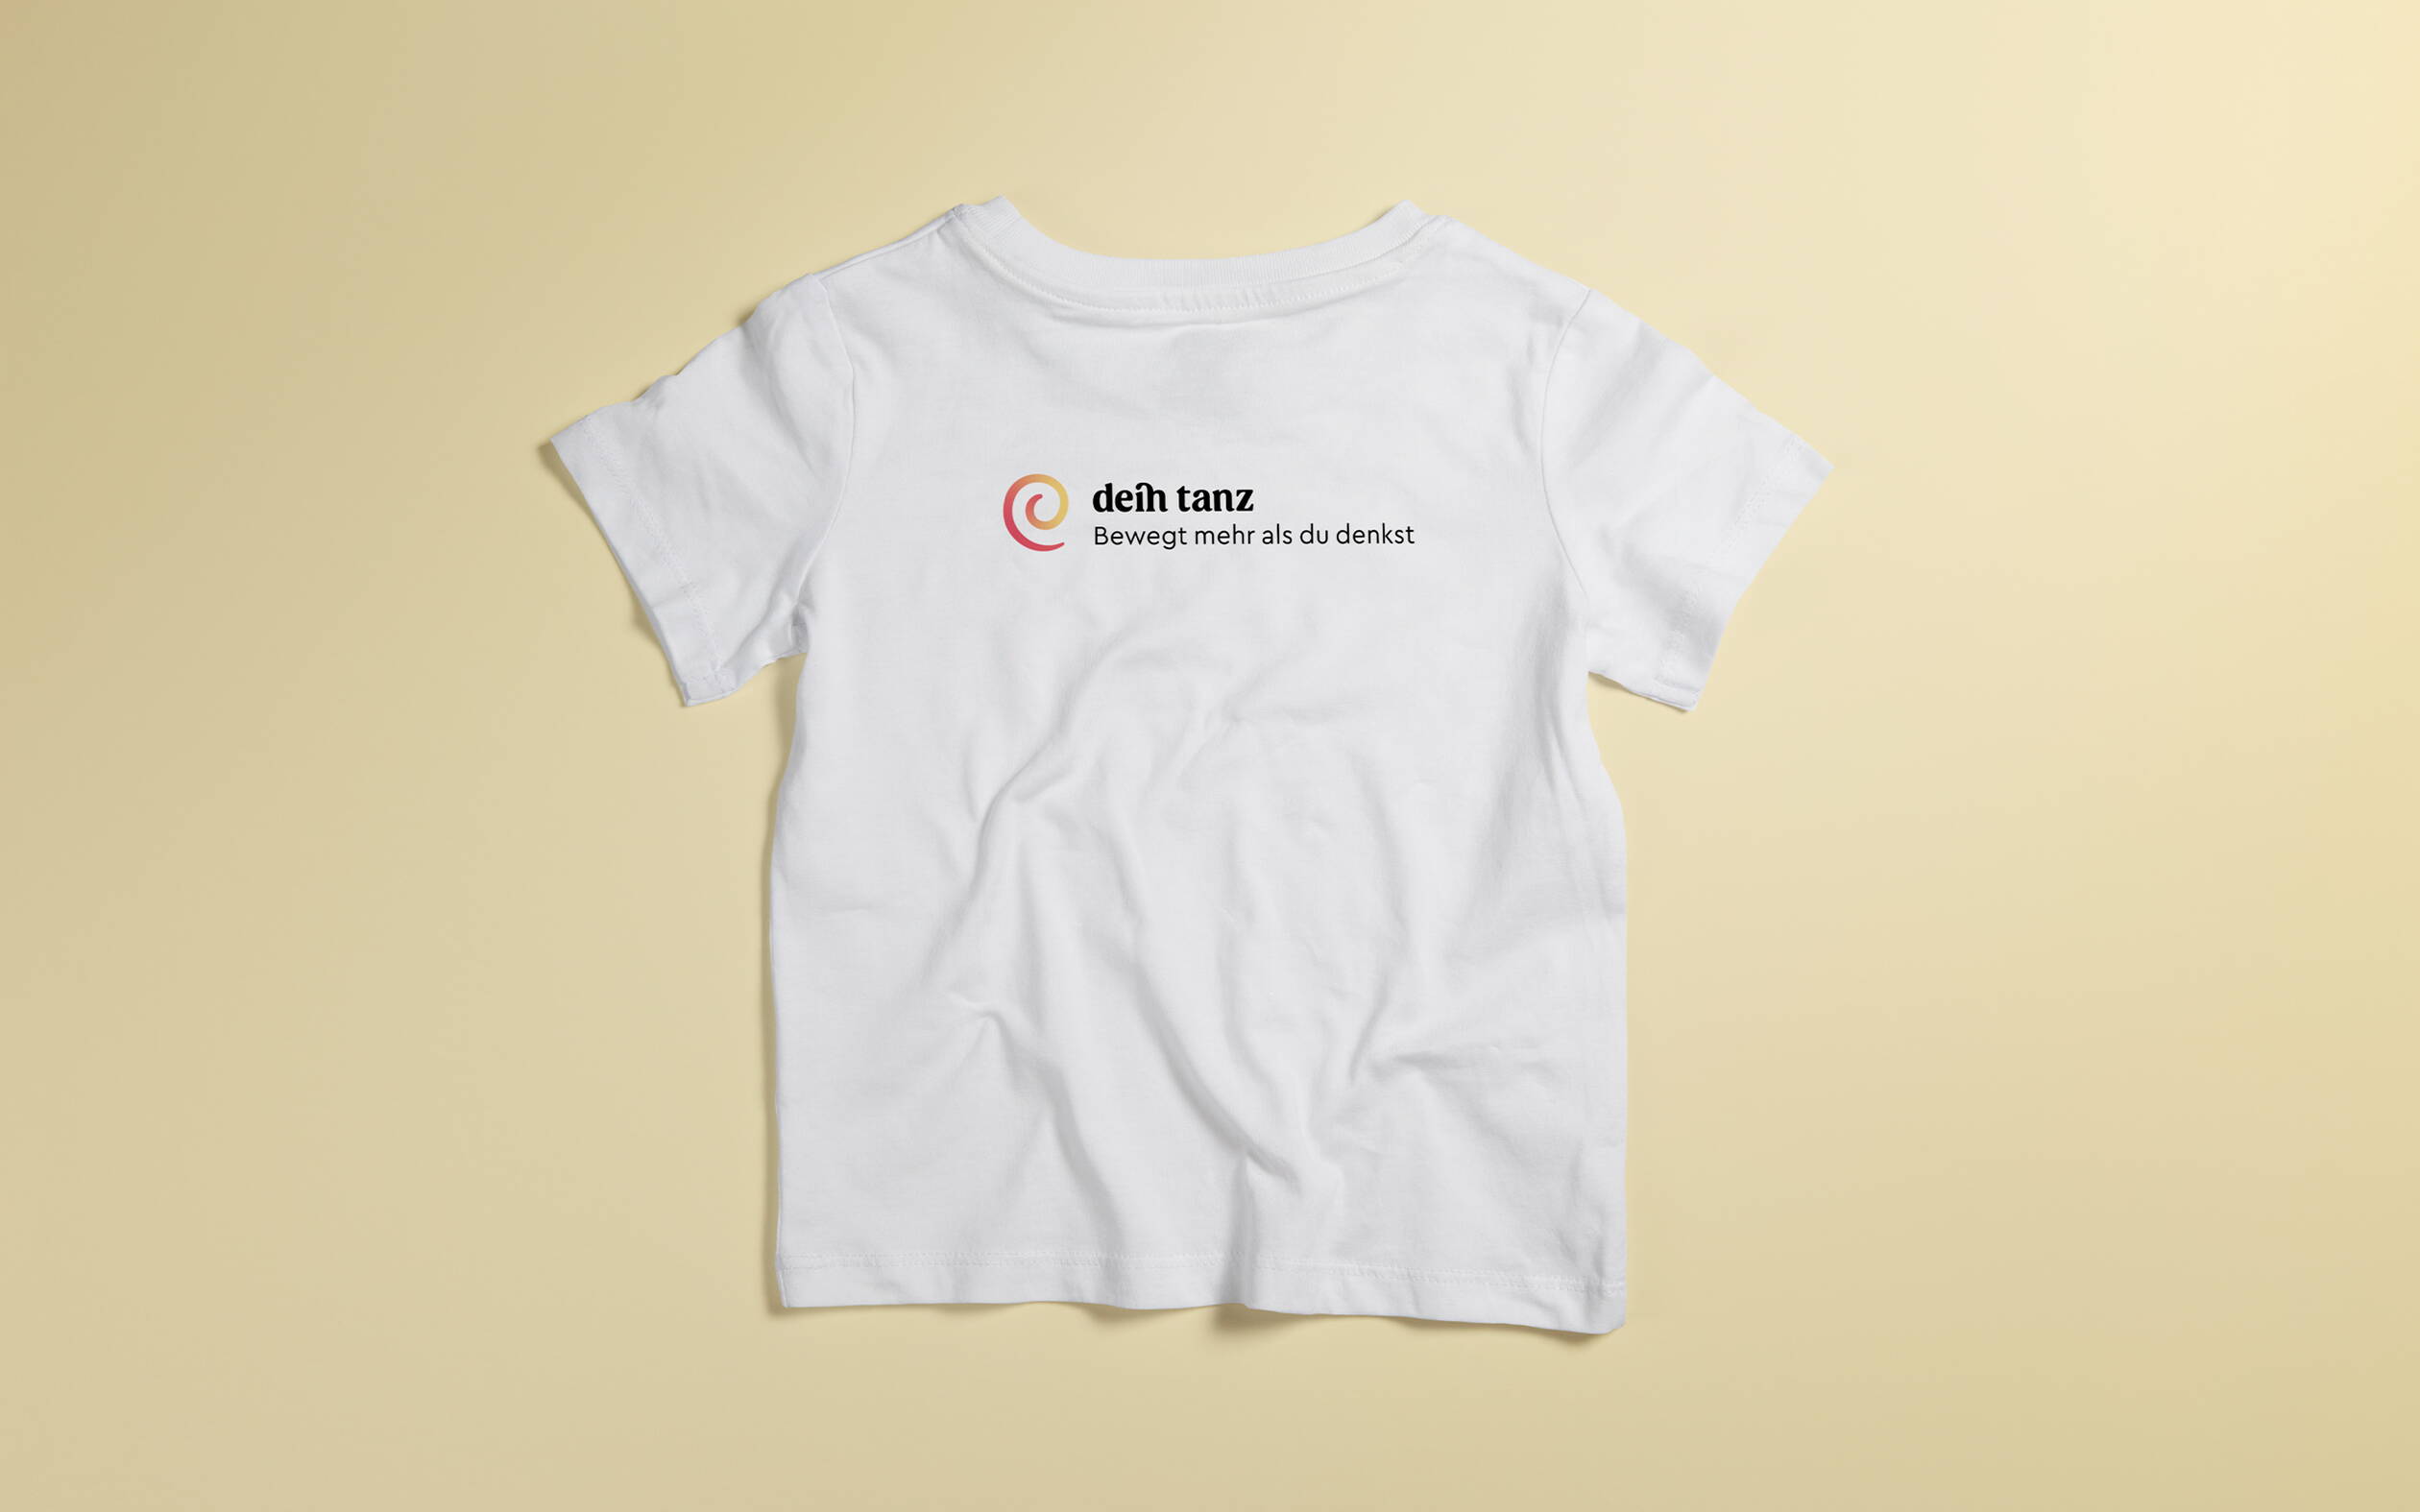 gabriela-martinelli-design-dein-tanz-logodesign-t-shirt.jpg